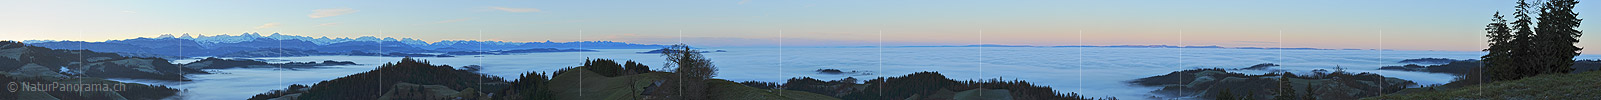 P015548: Panoramafoto Nebelmeer über dem Emmental